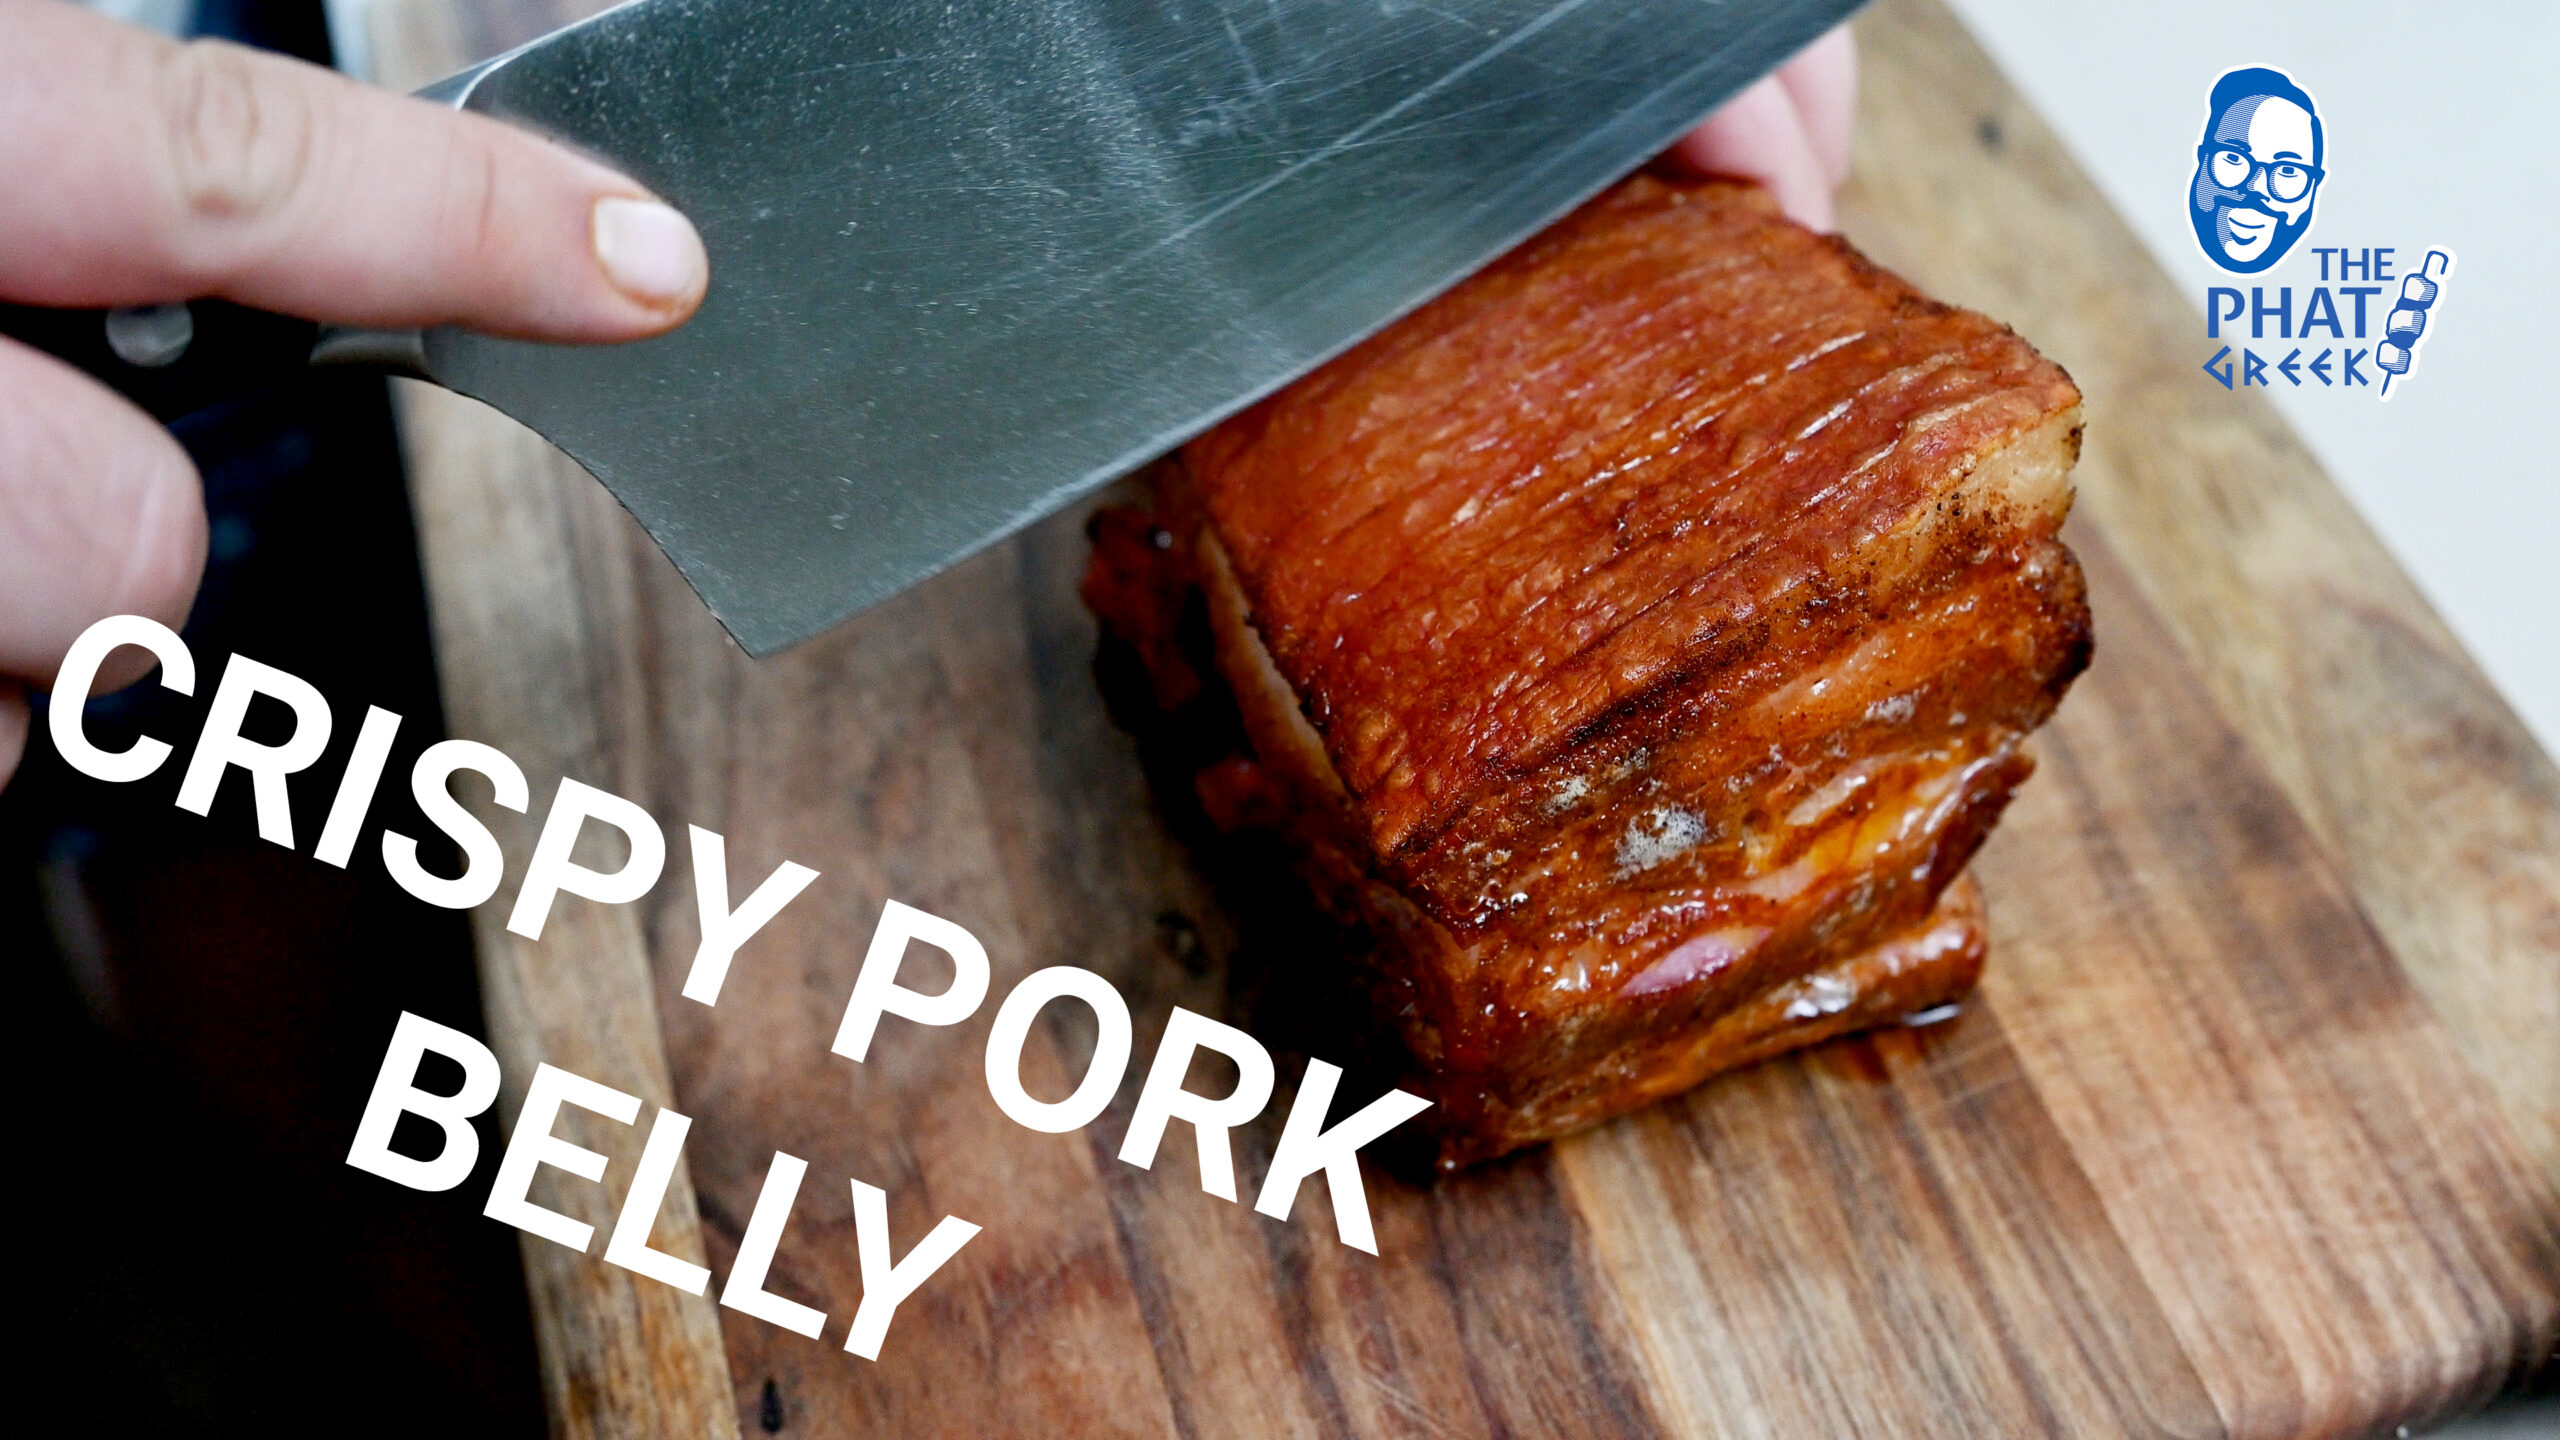 Crispy Pork Belly